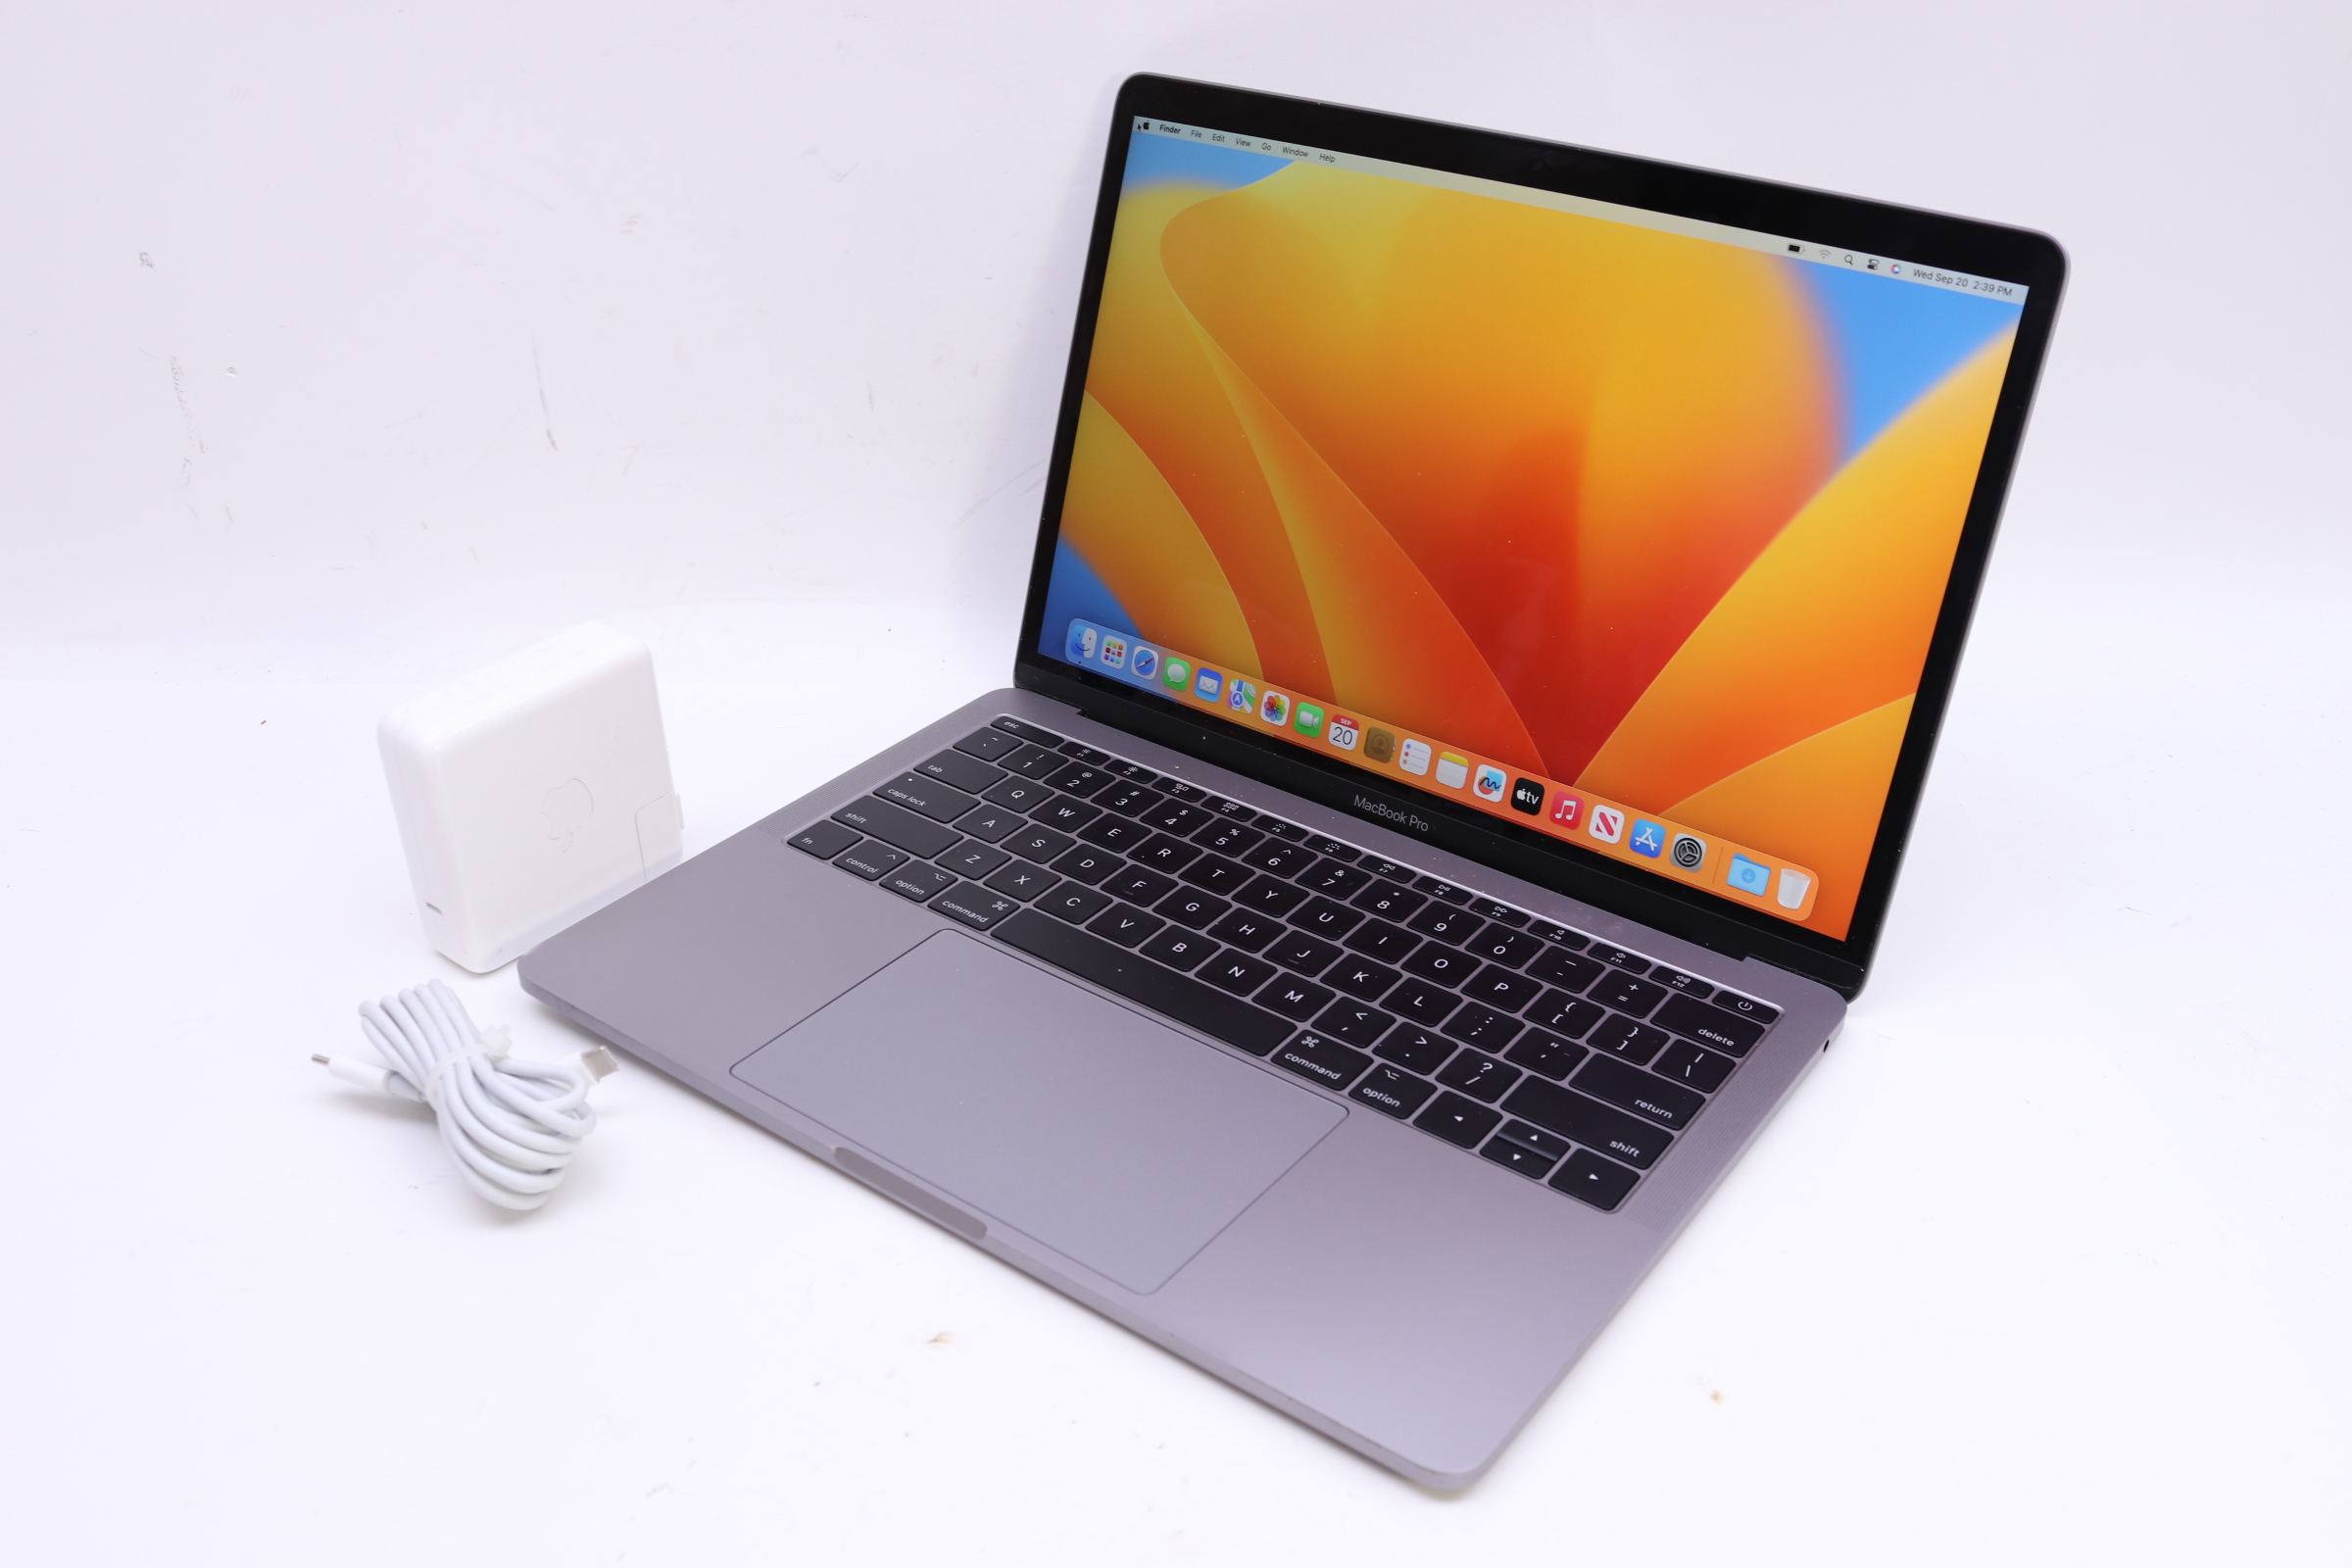  Apple MacBook Pro 13-inch 2.3GHz Core i5, 256GB